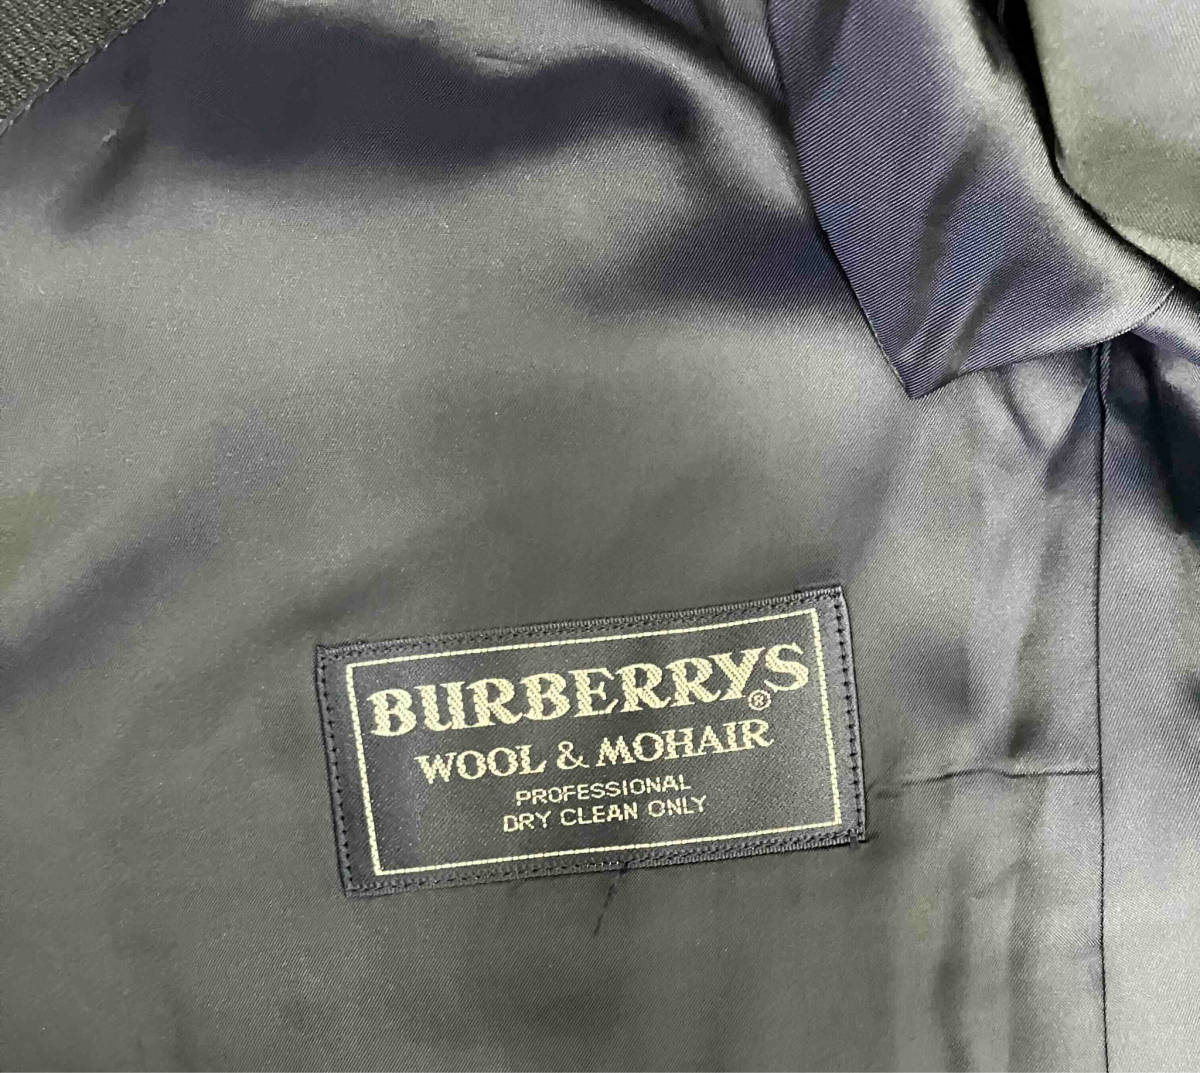 Burberrys' バーバリー メンズ ダブルジャケット BBD41-504-28 ネイビー レトロ ネーム刺繍入り_画像6